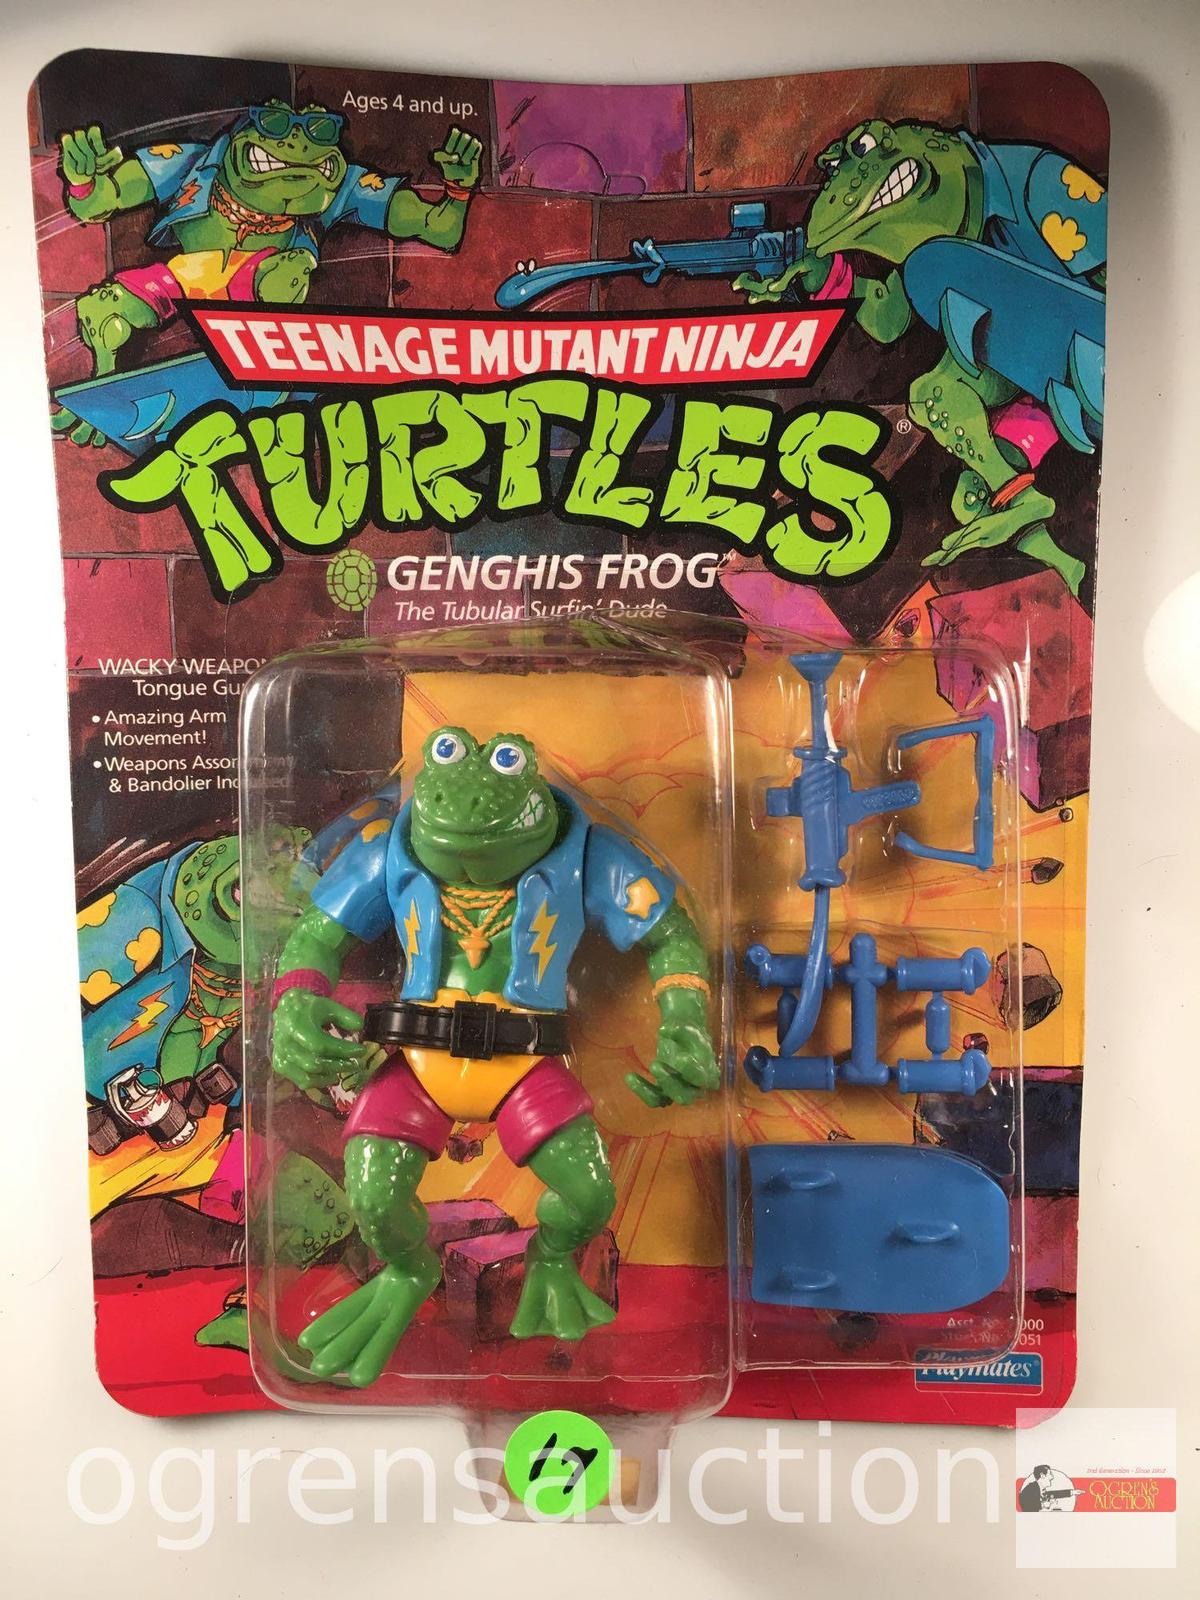 Toys - Teenage Mutant Ninja Turtles, 1989 Genghis Frog - The Tubular Surfin' Dude